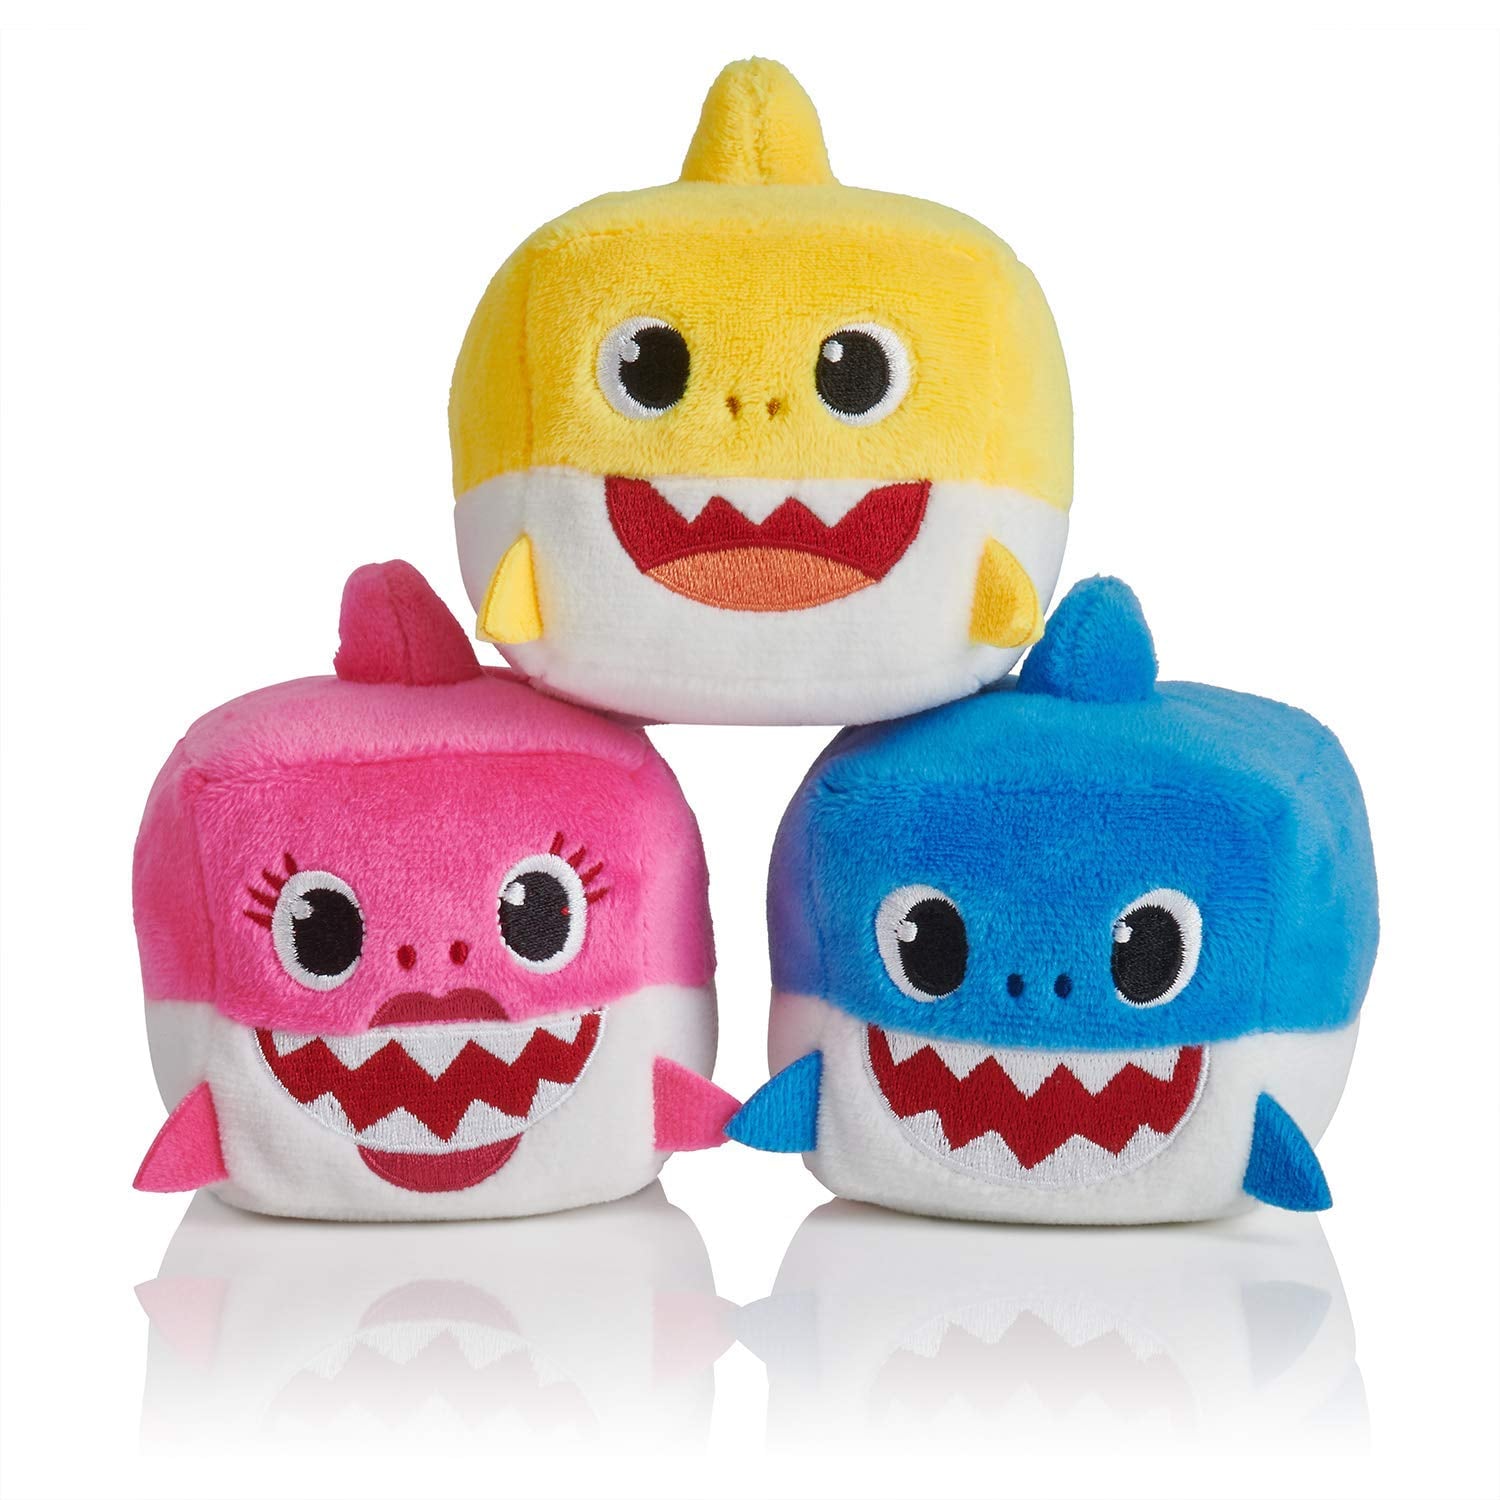 walmart baby shark toys